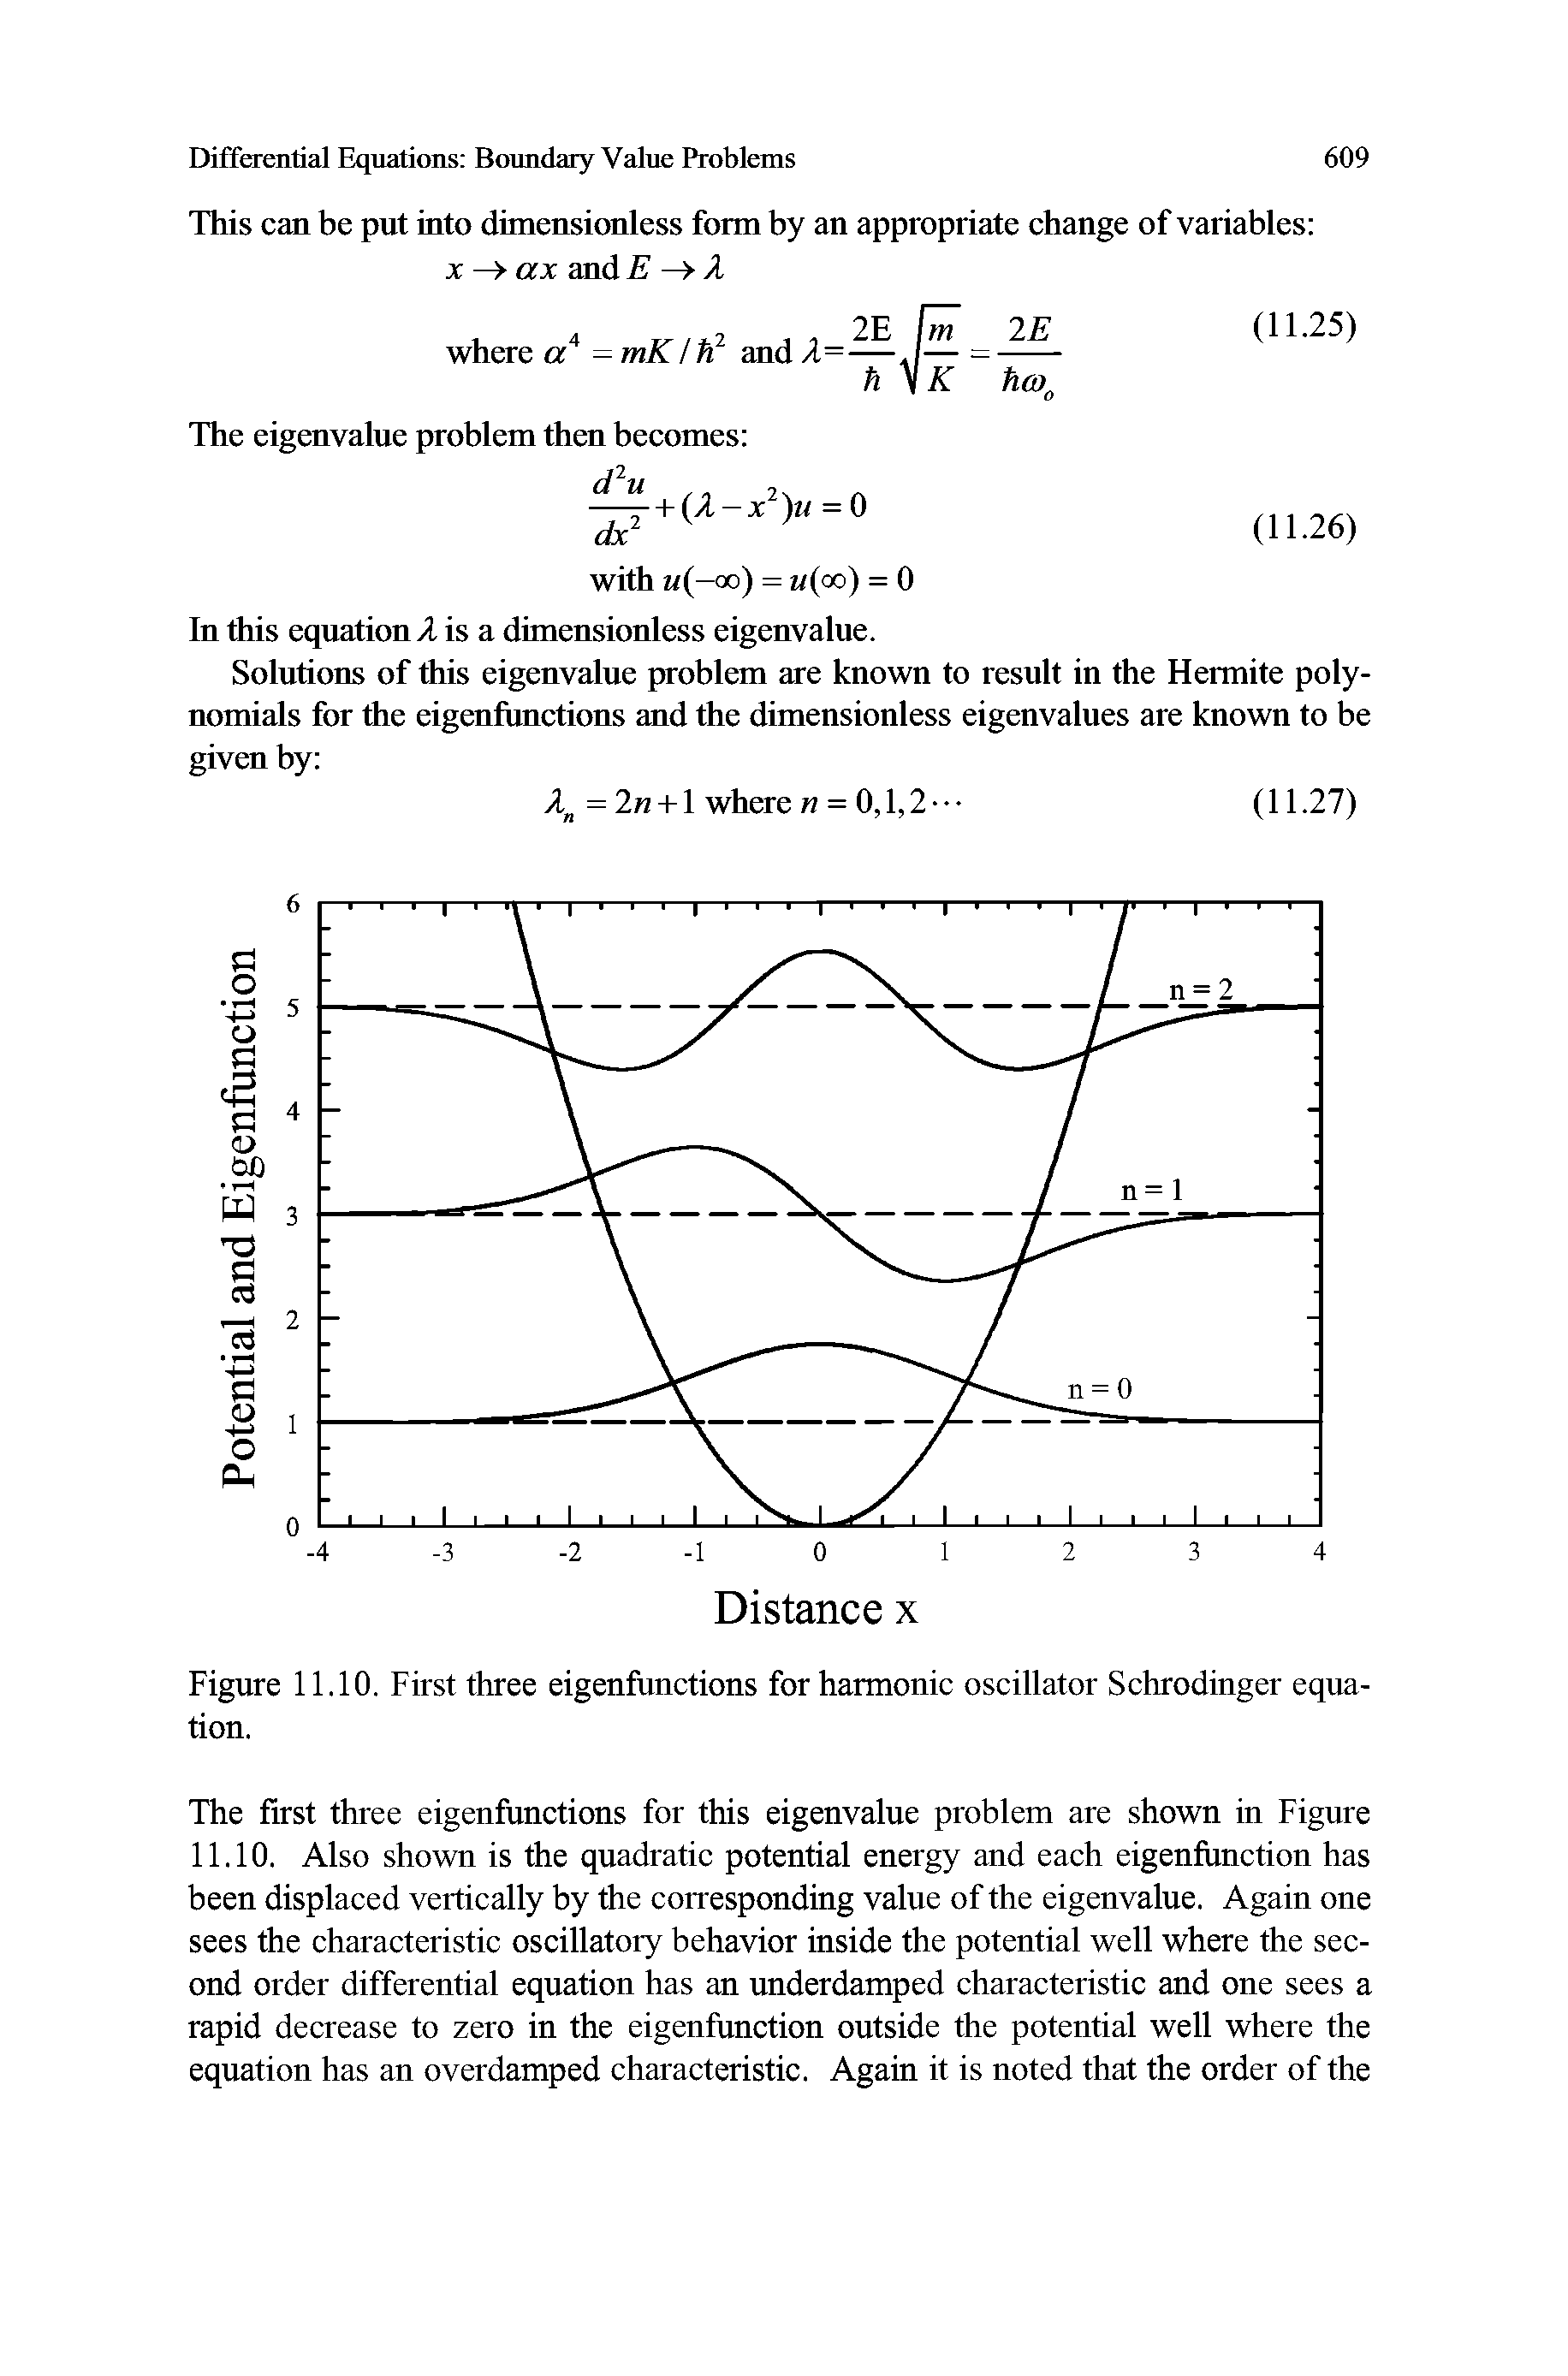 Figure 11.10. First three eigenfunctions for harmonic oscillator Schrodinger equation.